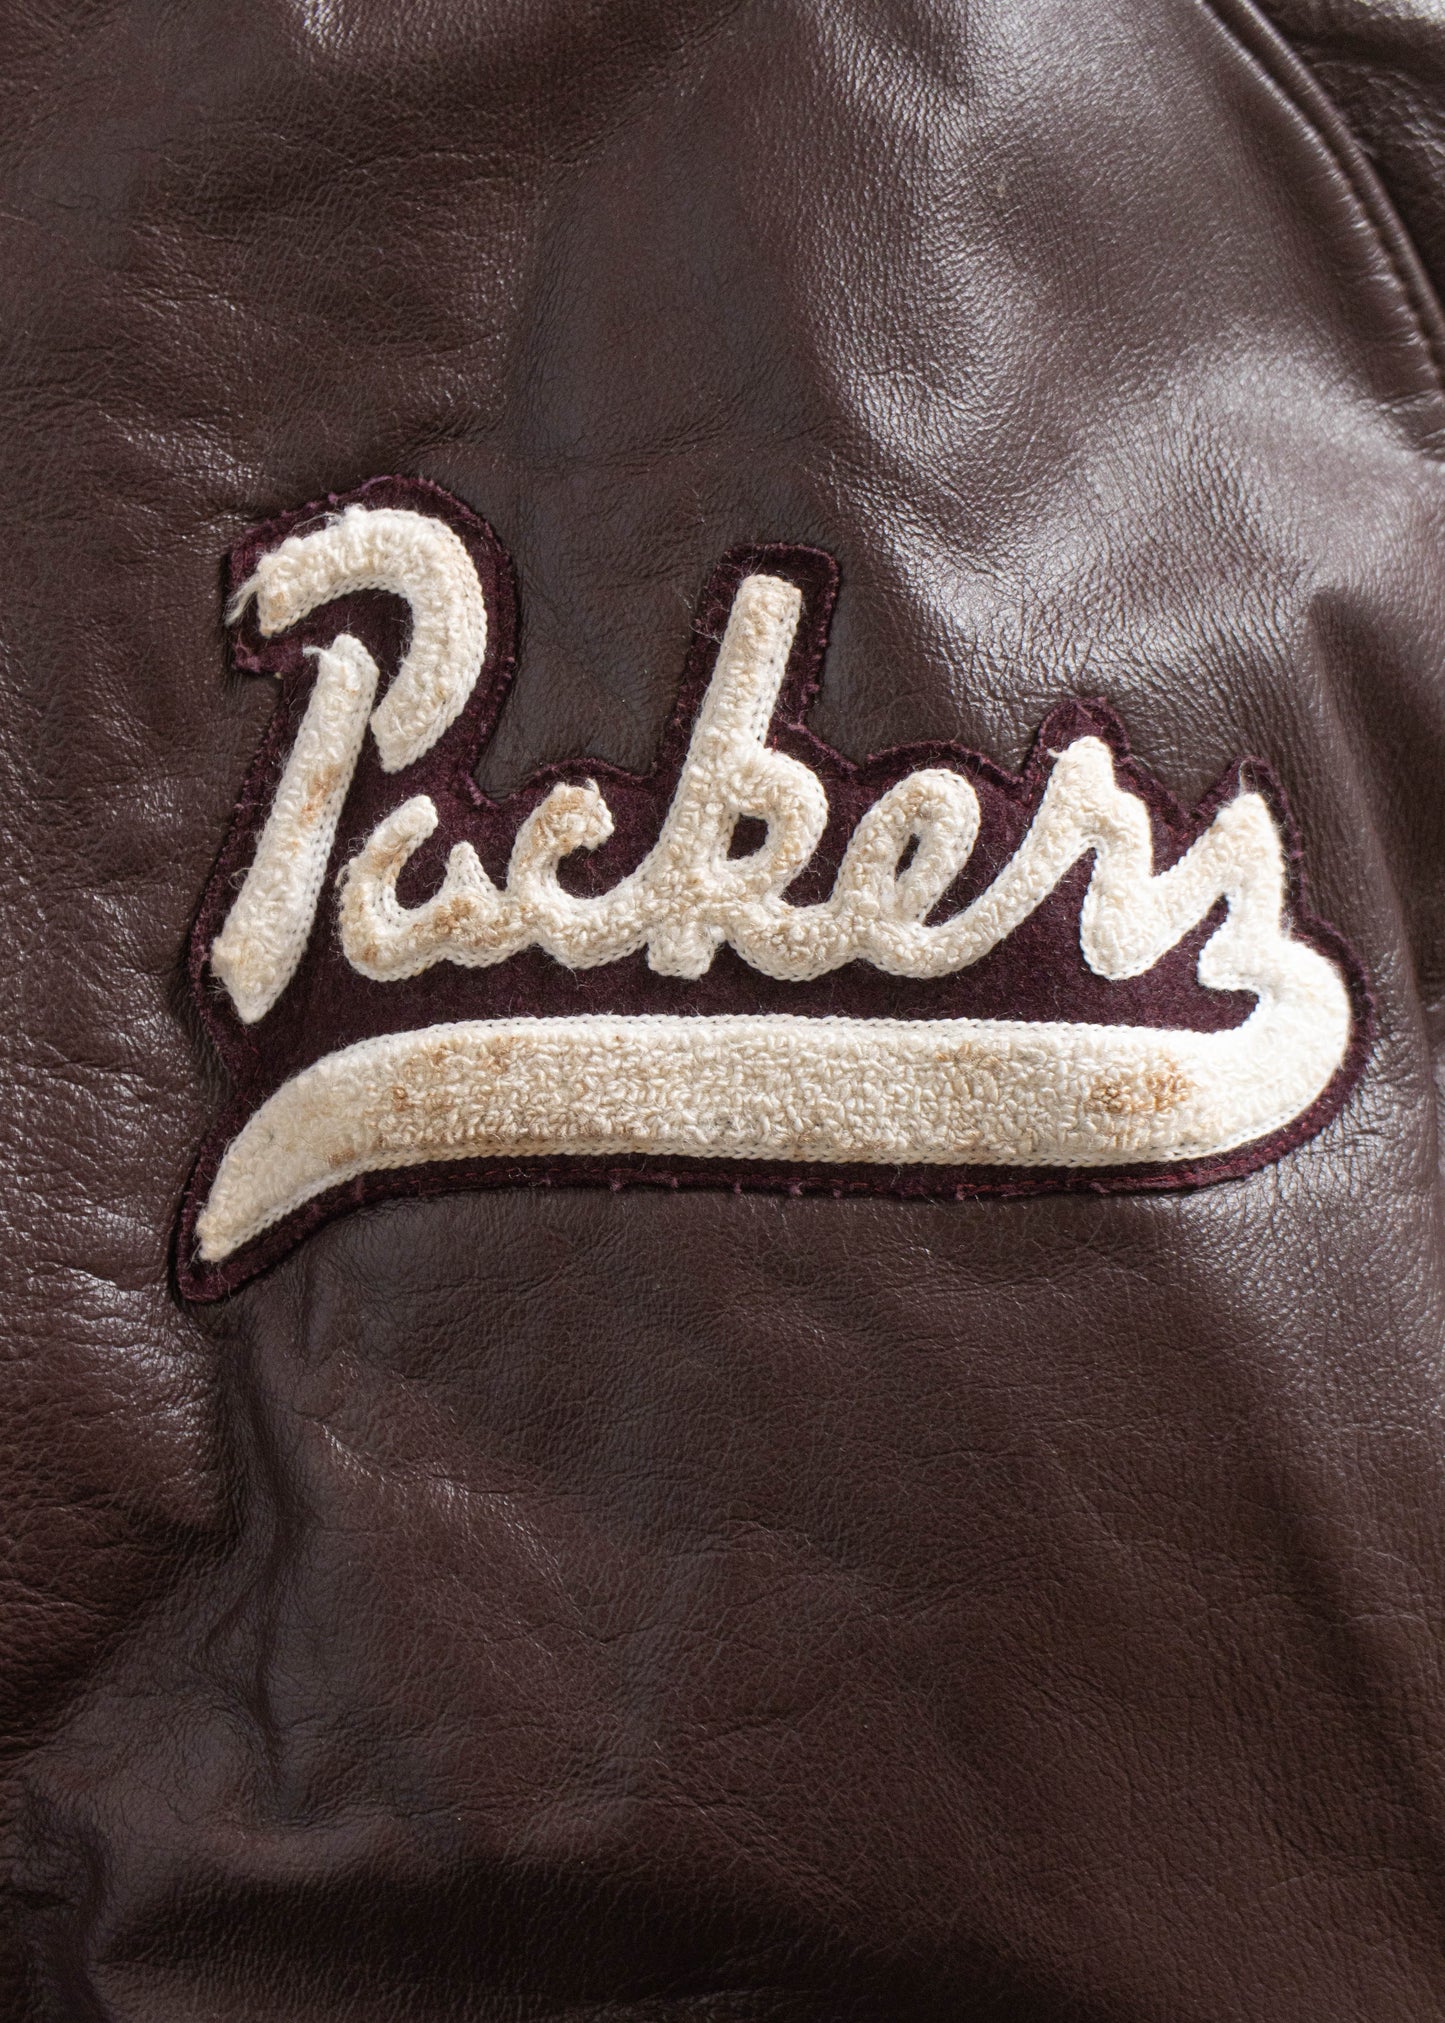 Vintage 1980s Delong Packers Varsity Letterman Leather Jacket Size L/XL